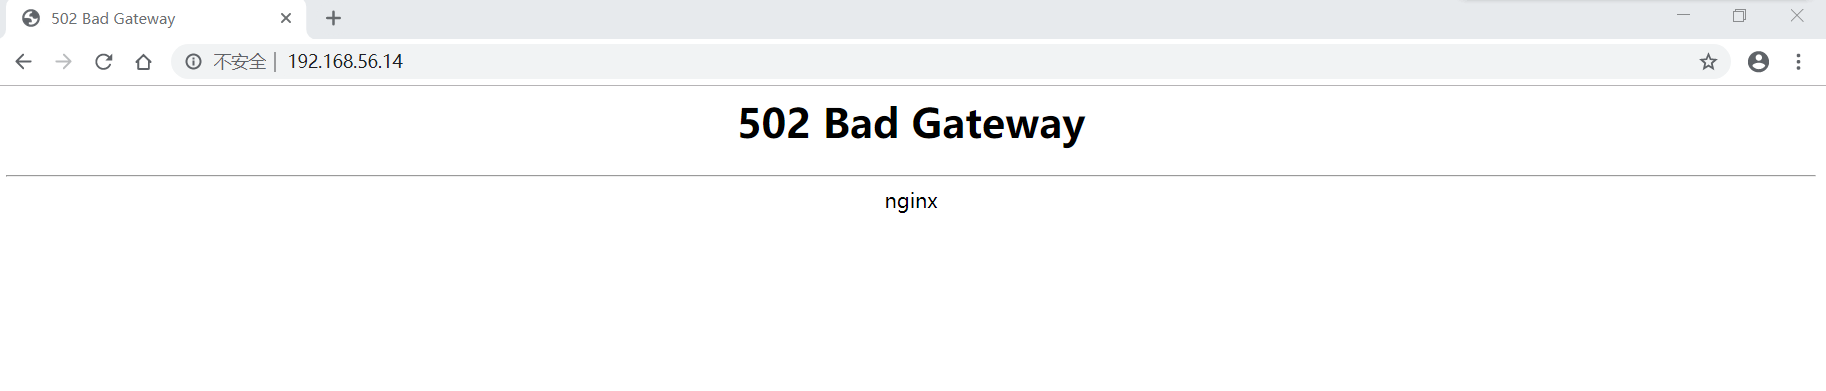 502_bad_gateway.png